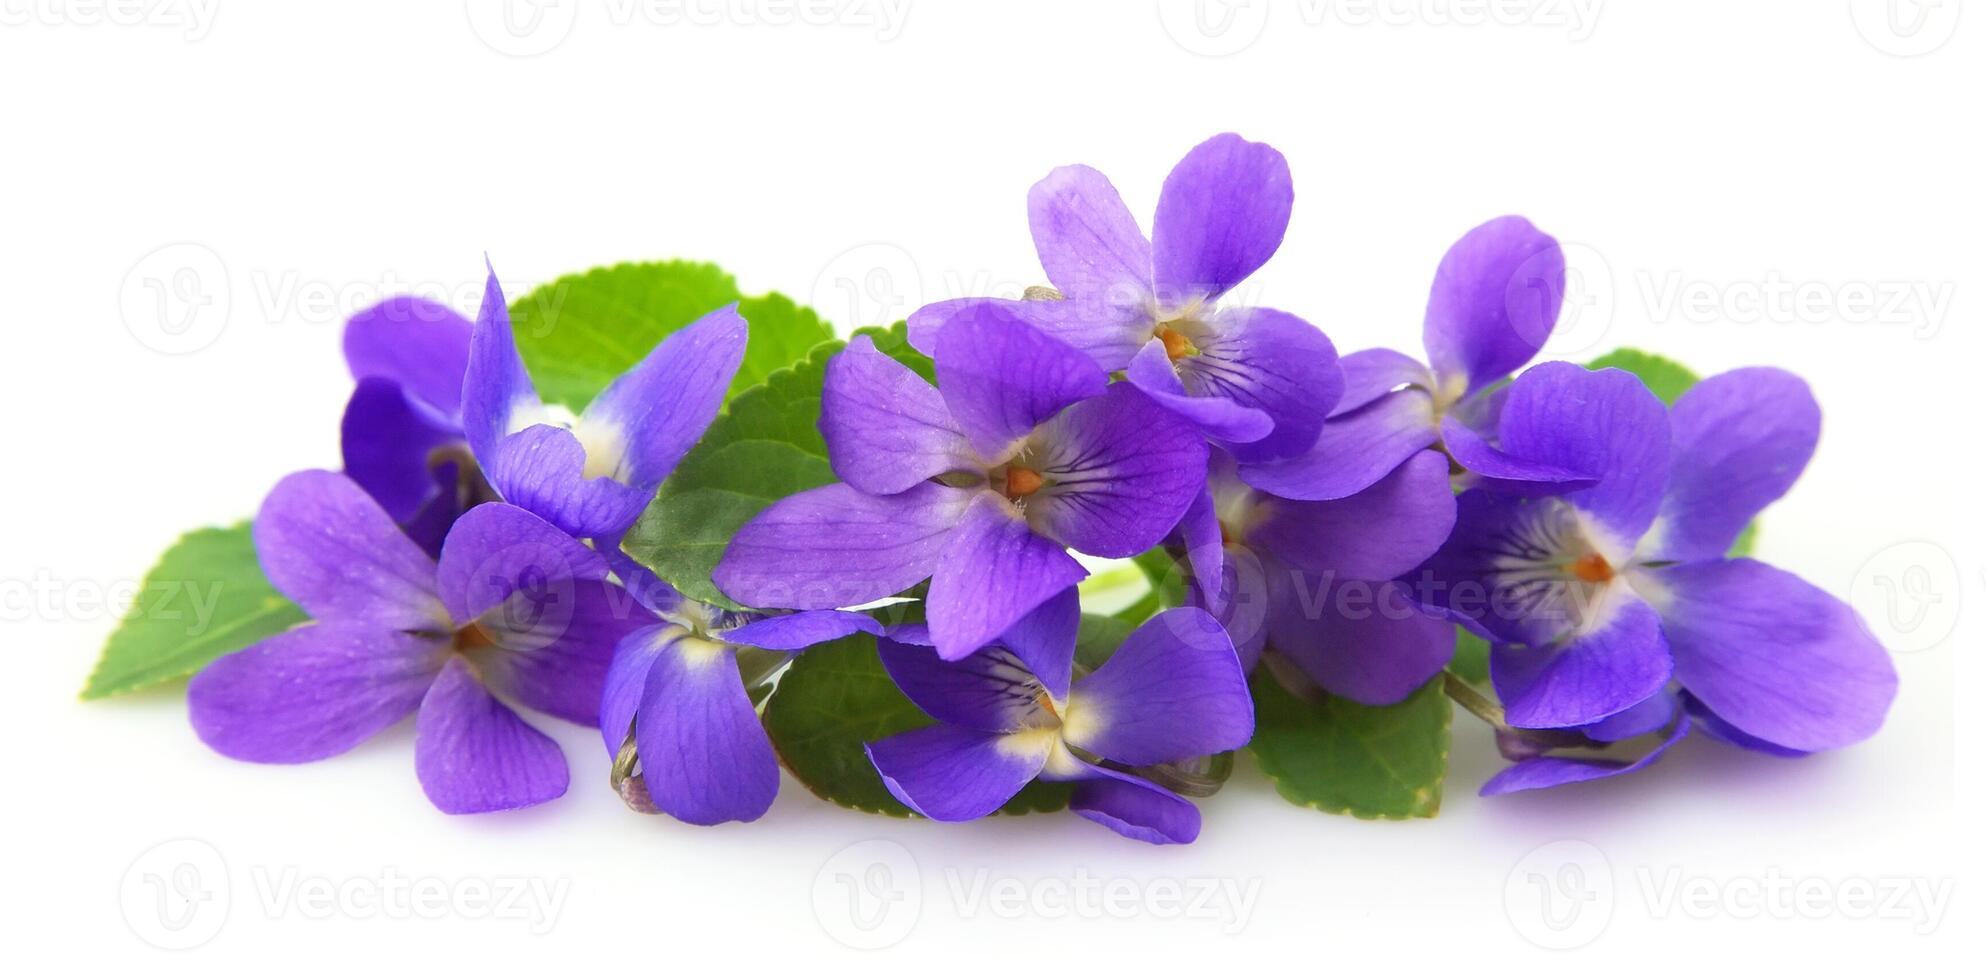 violette fiori su bianca sfondi foto